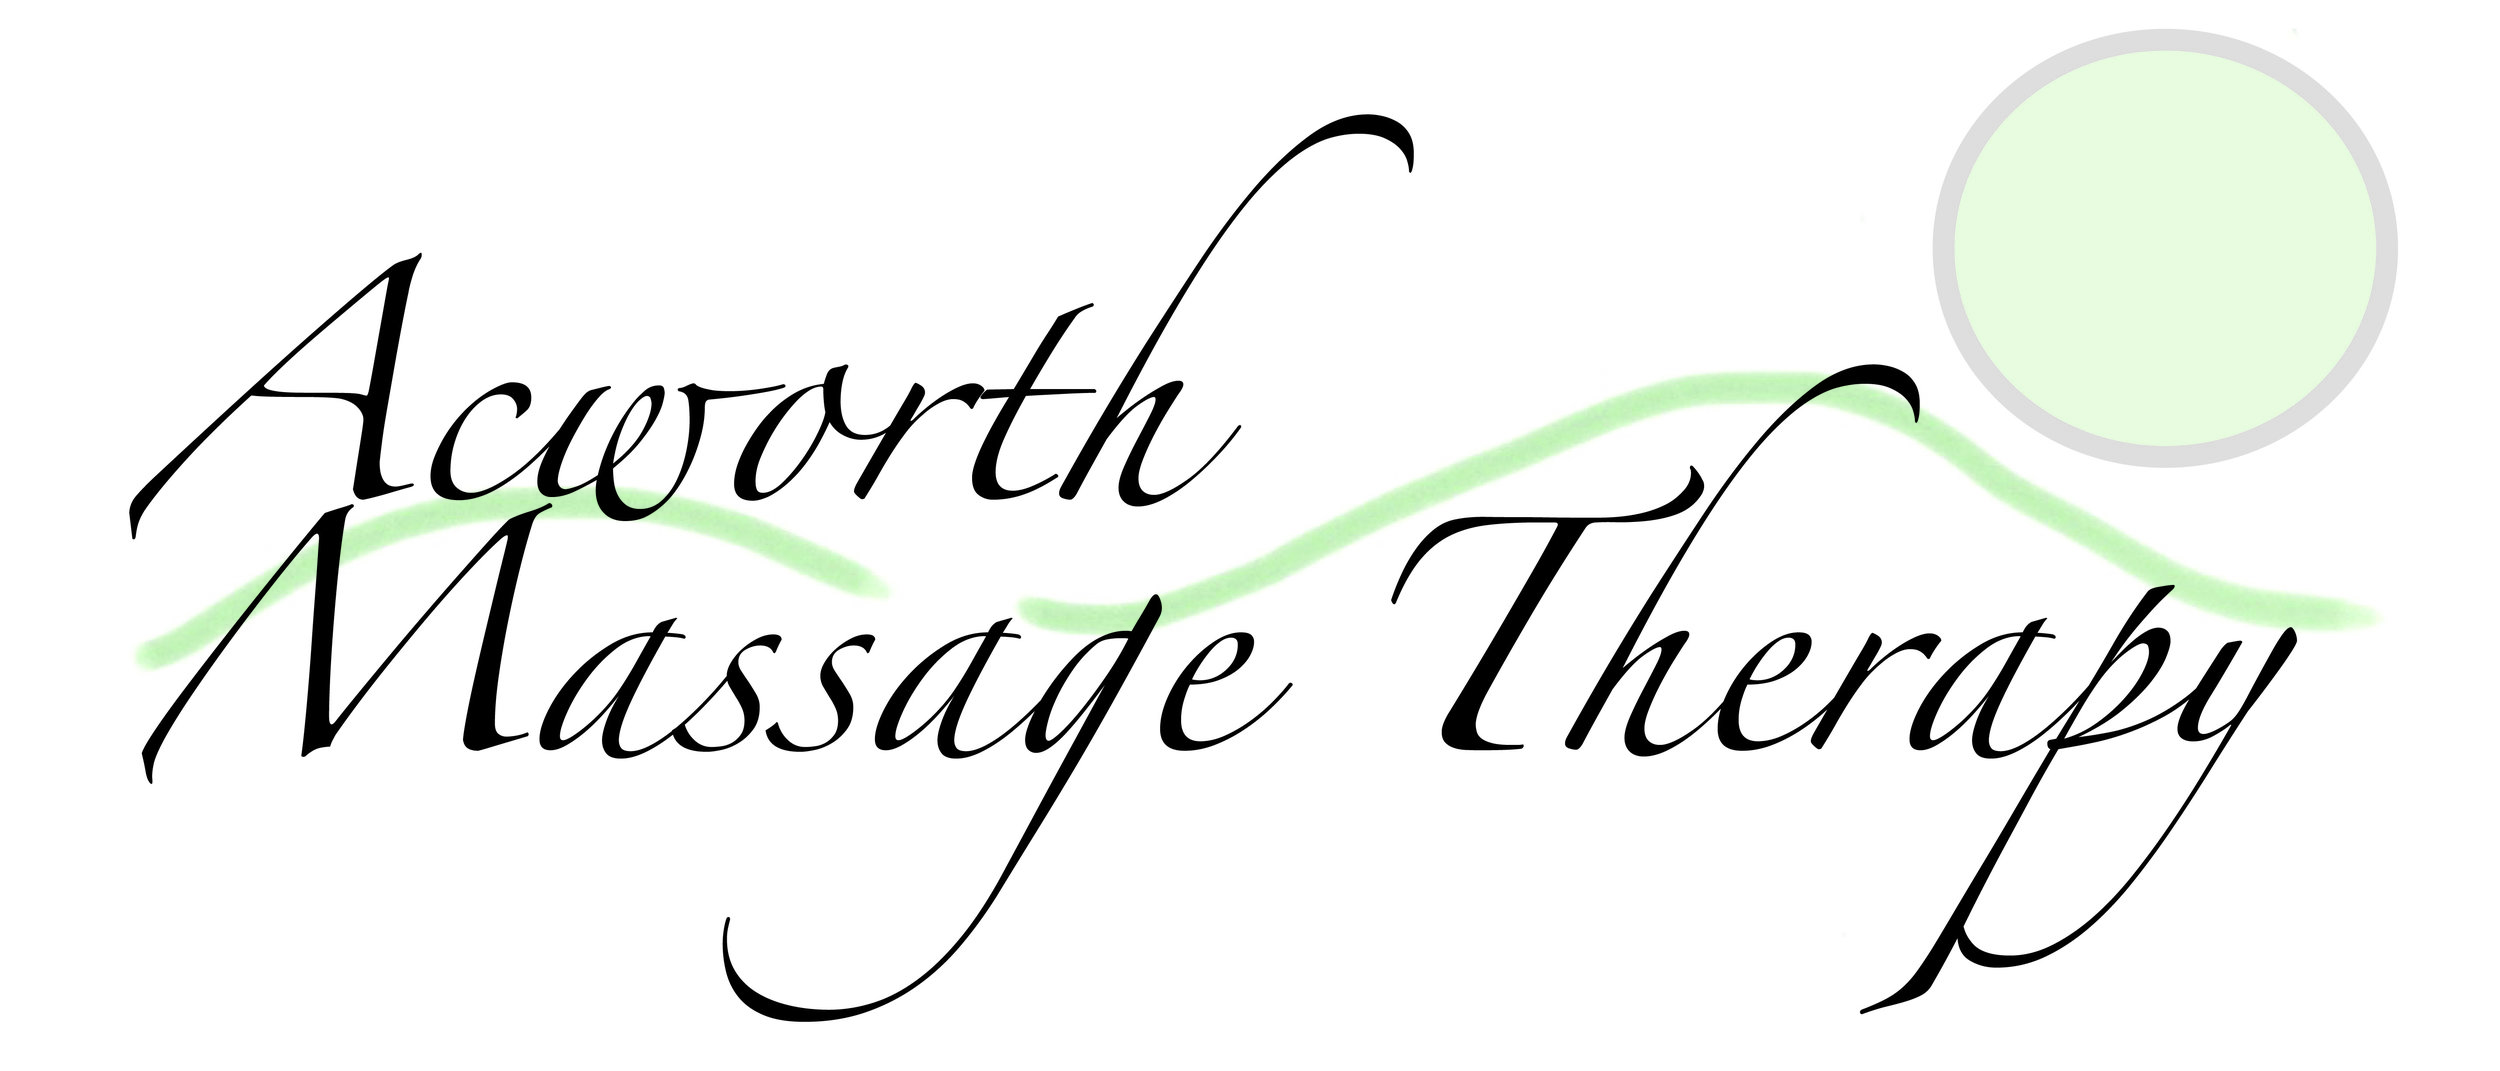 Acworth Massage Therapy